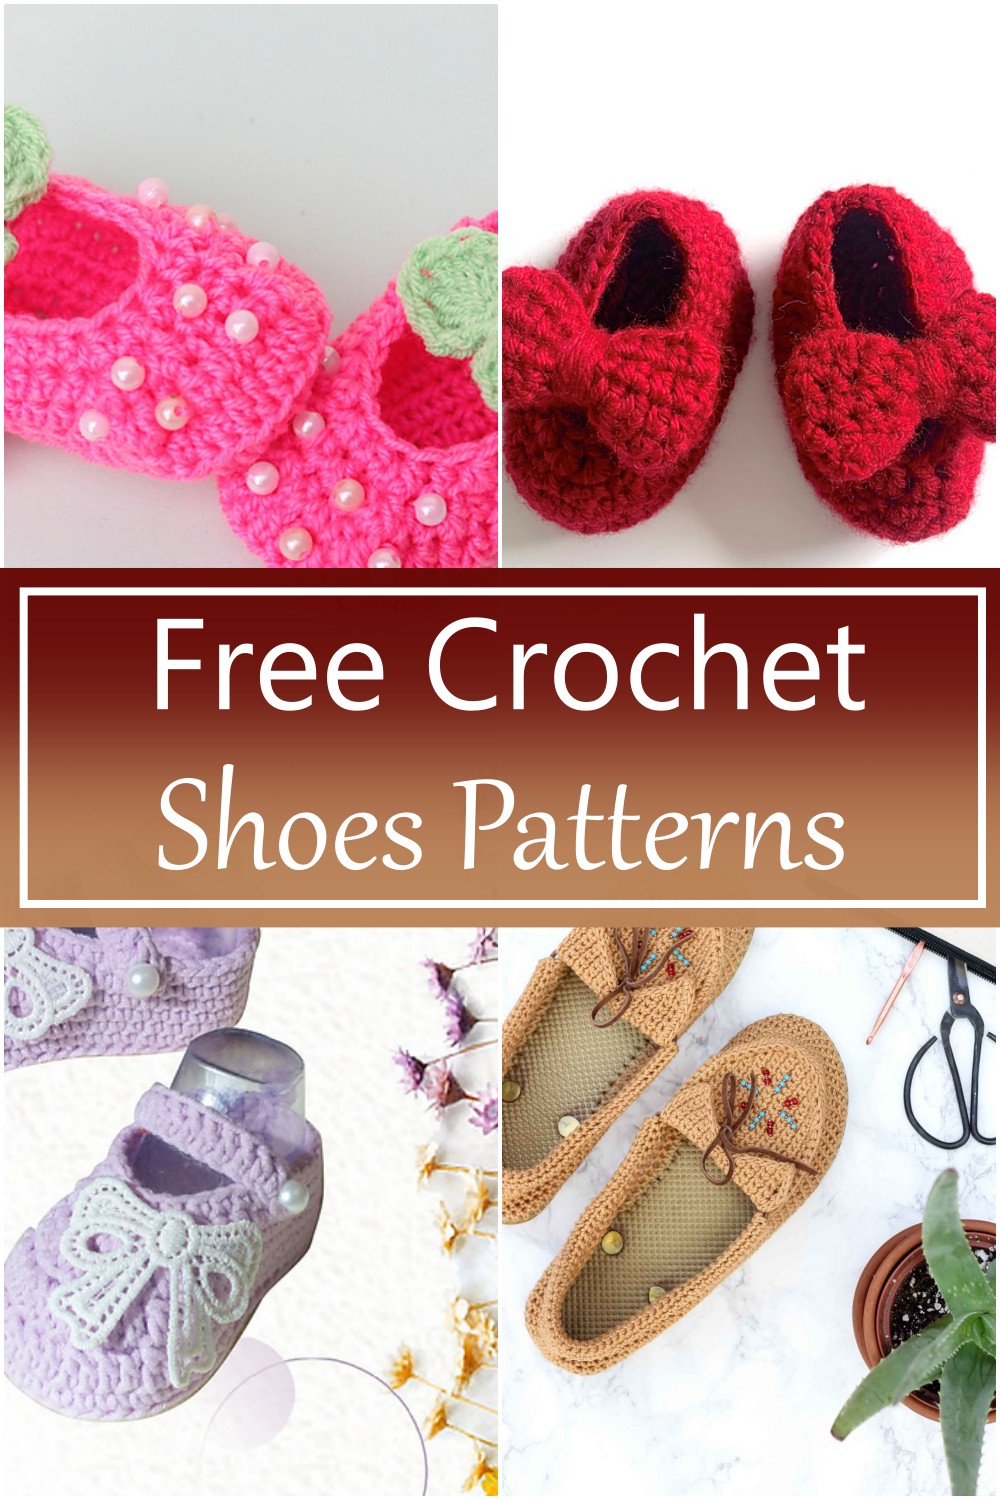 10 Free Crochet Shoes Patterns